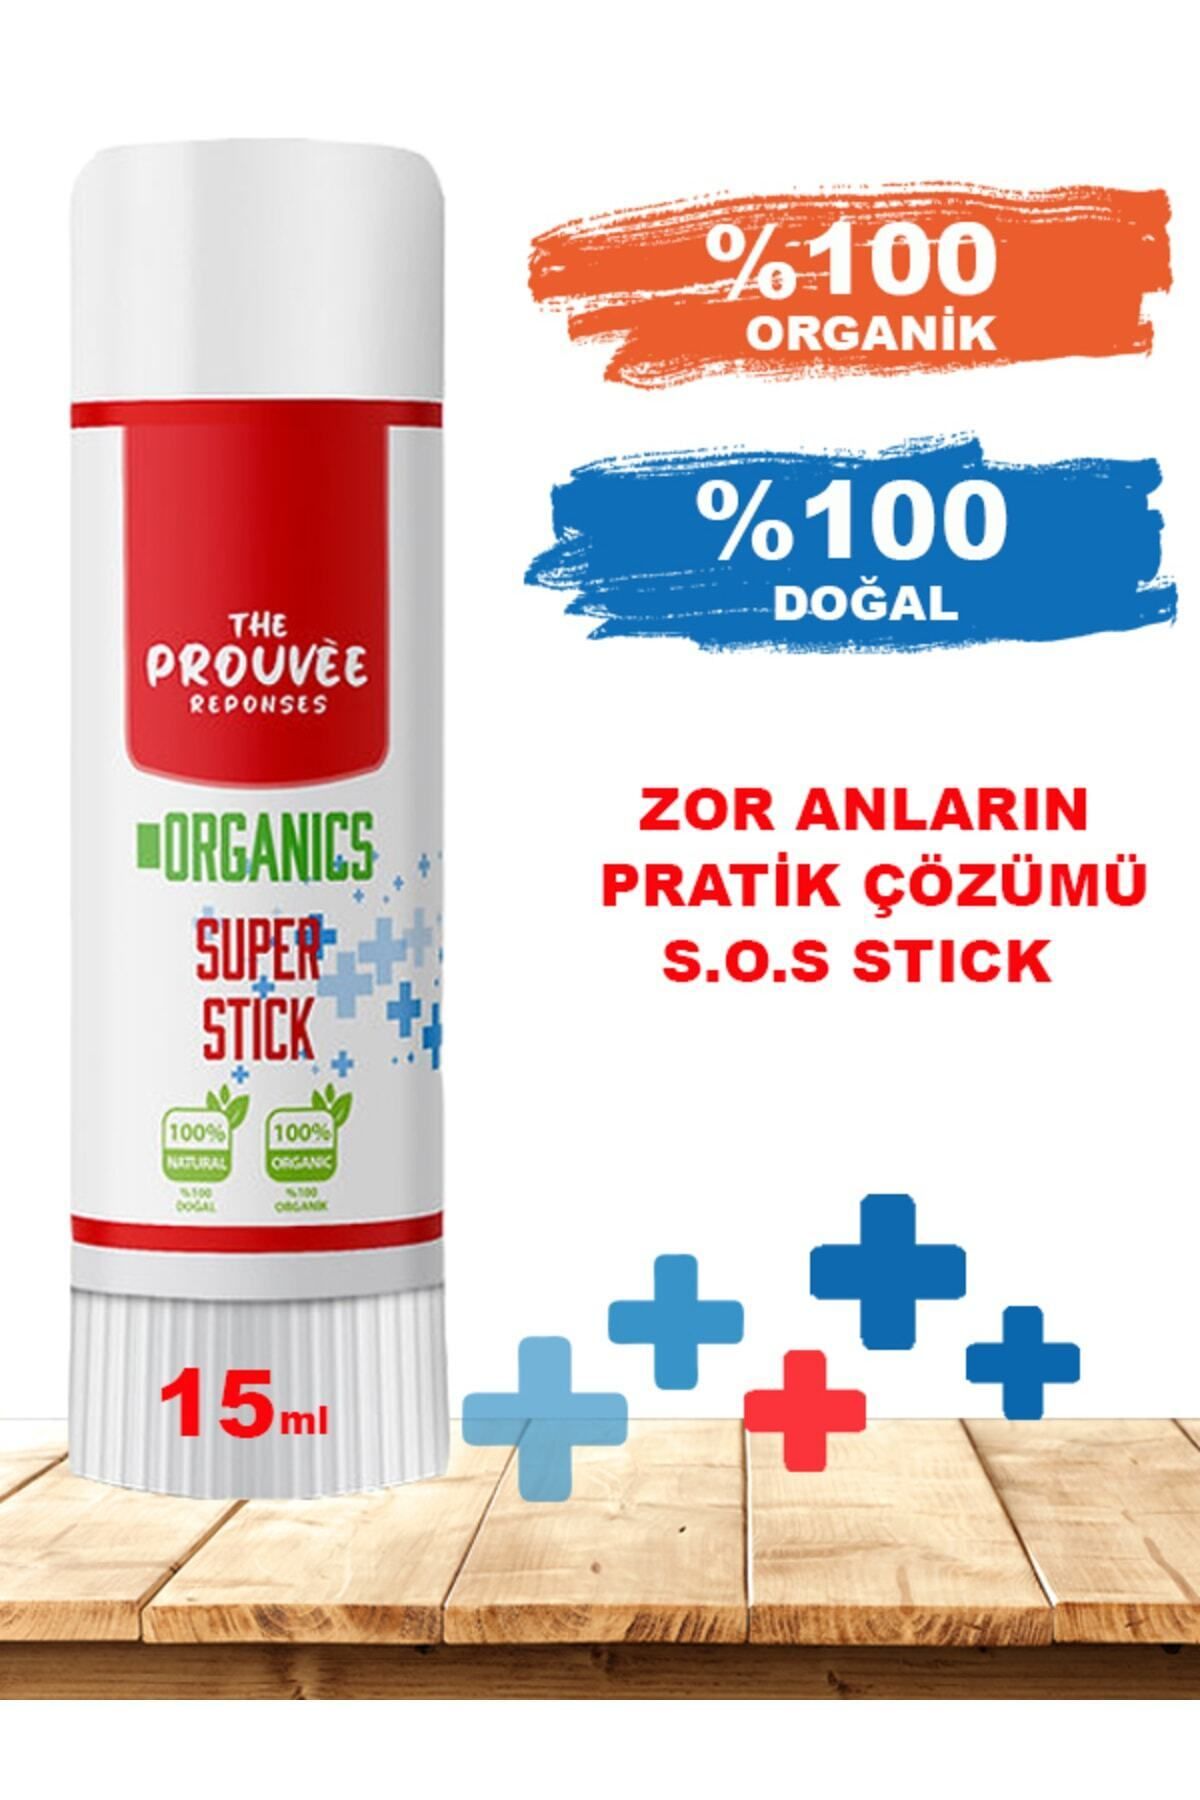 The Prouvee Reponses %100 Organik Süper Stick 15ml